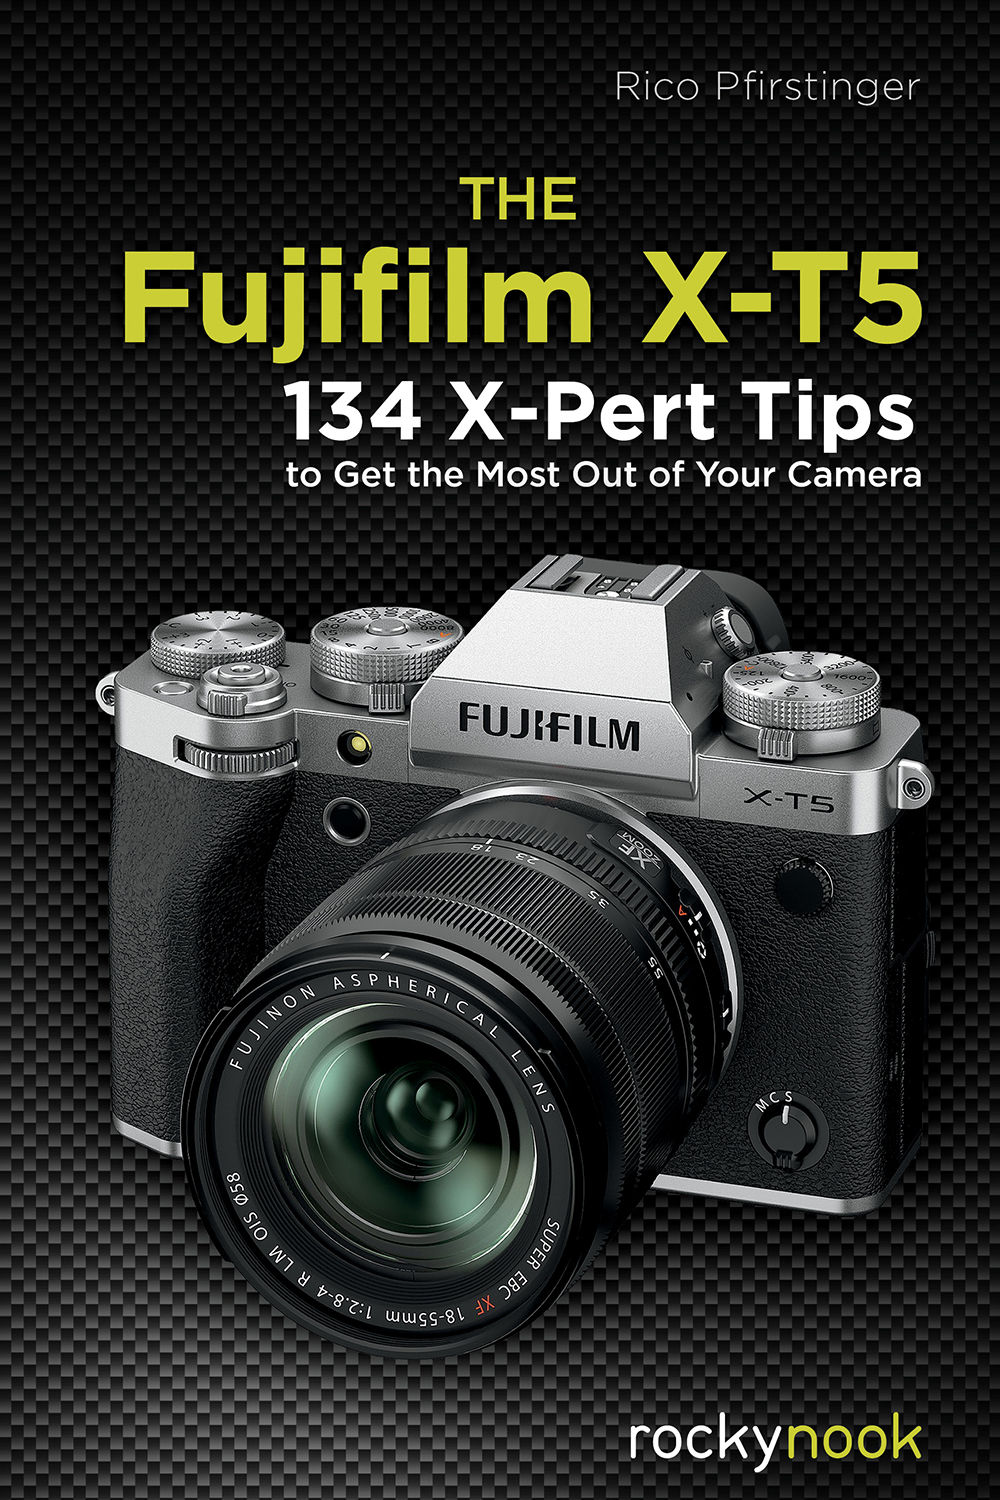 FUJIFILM X-T5, Cameras